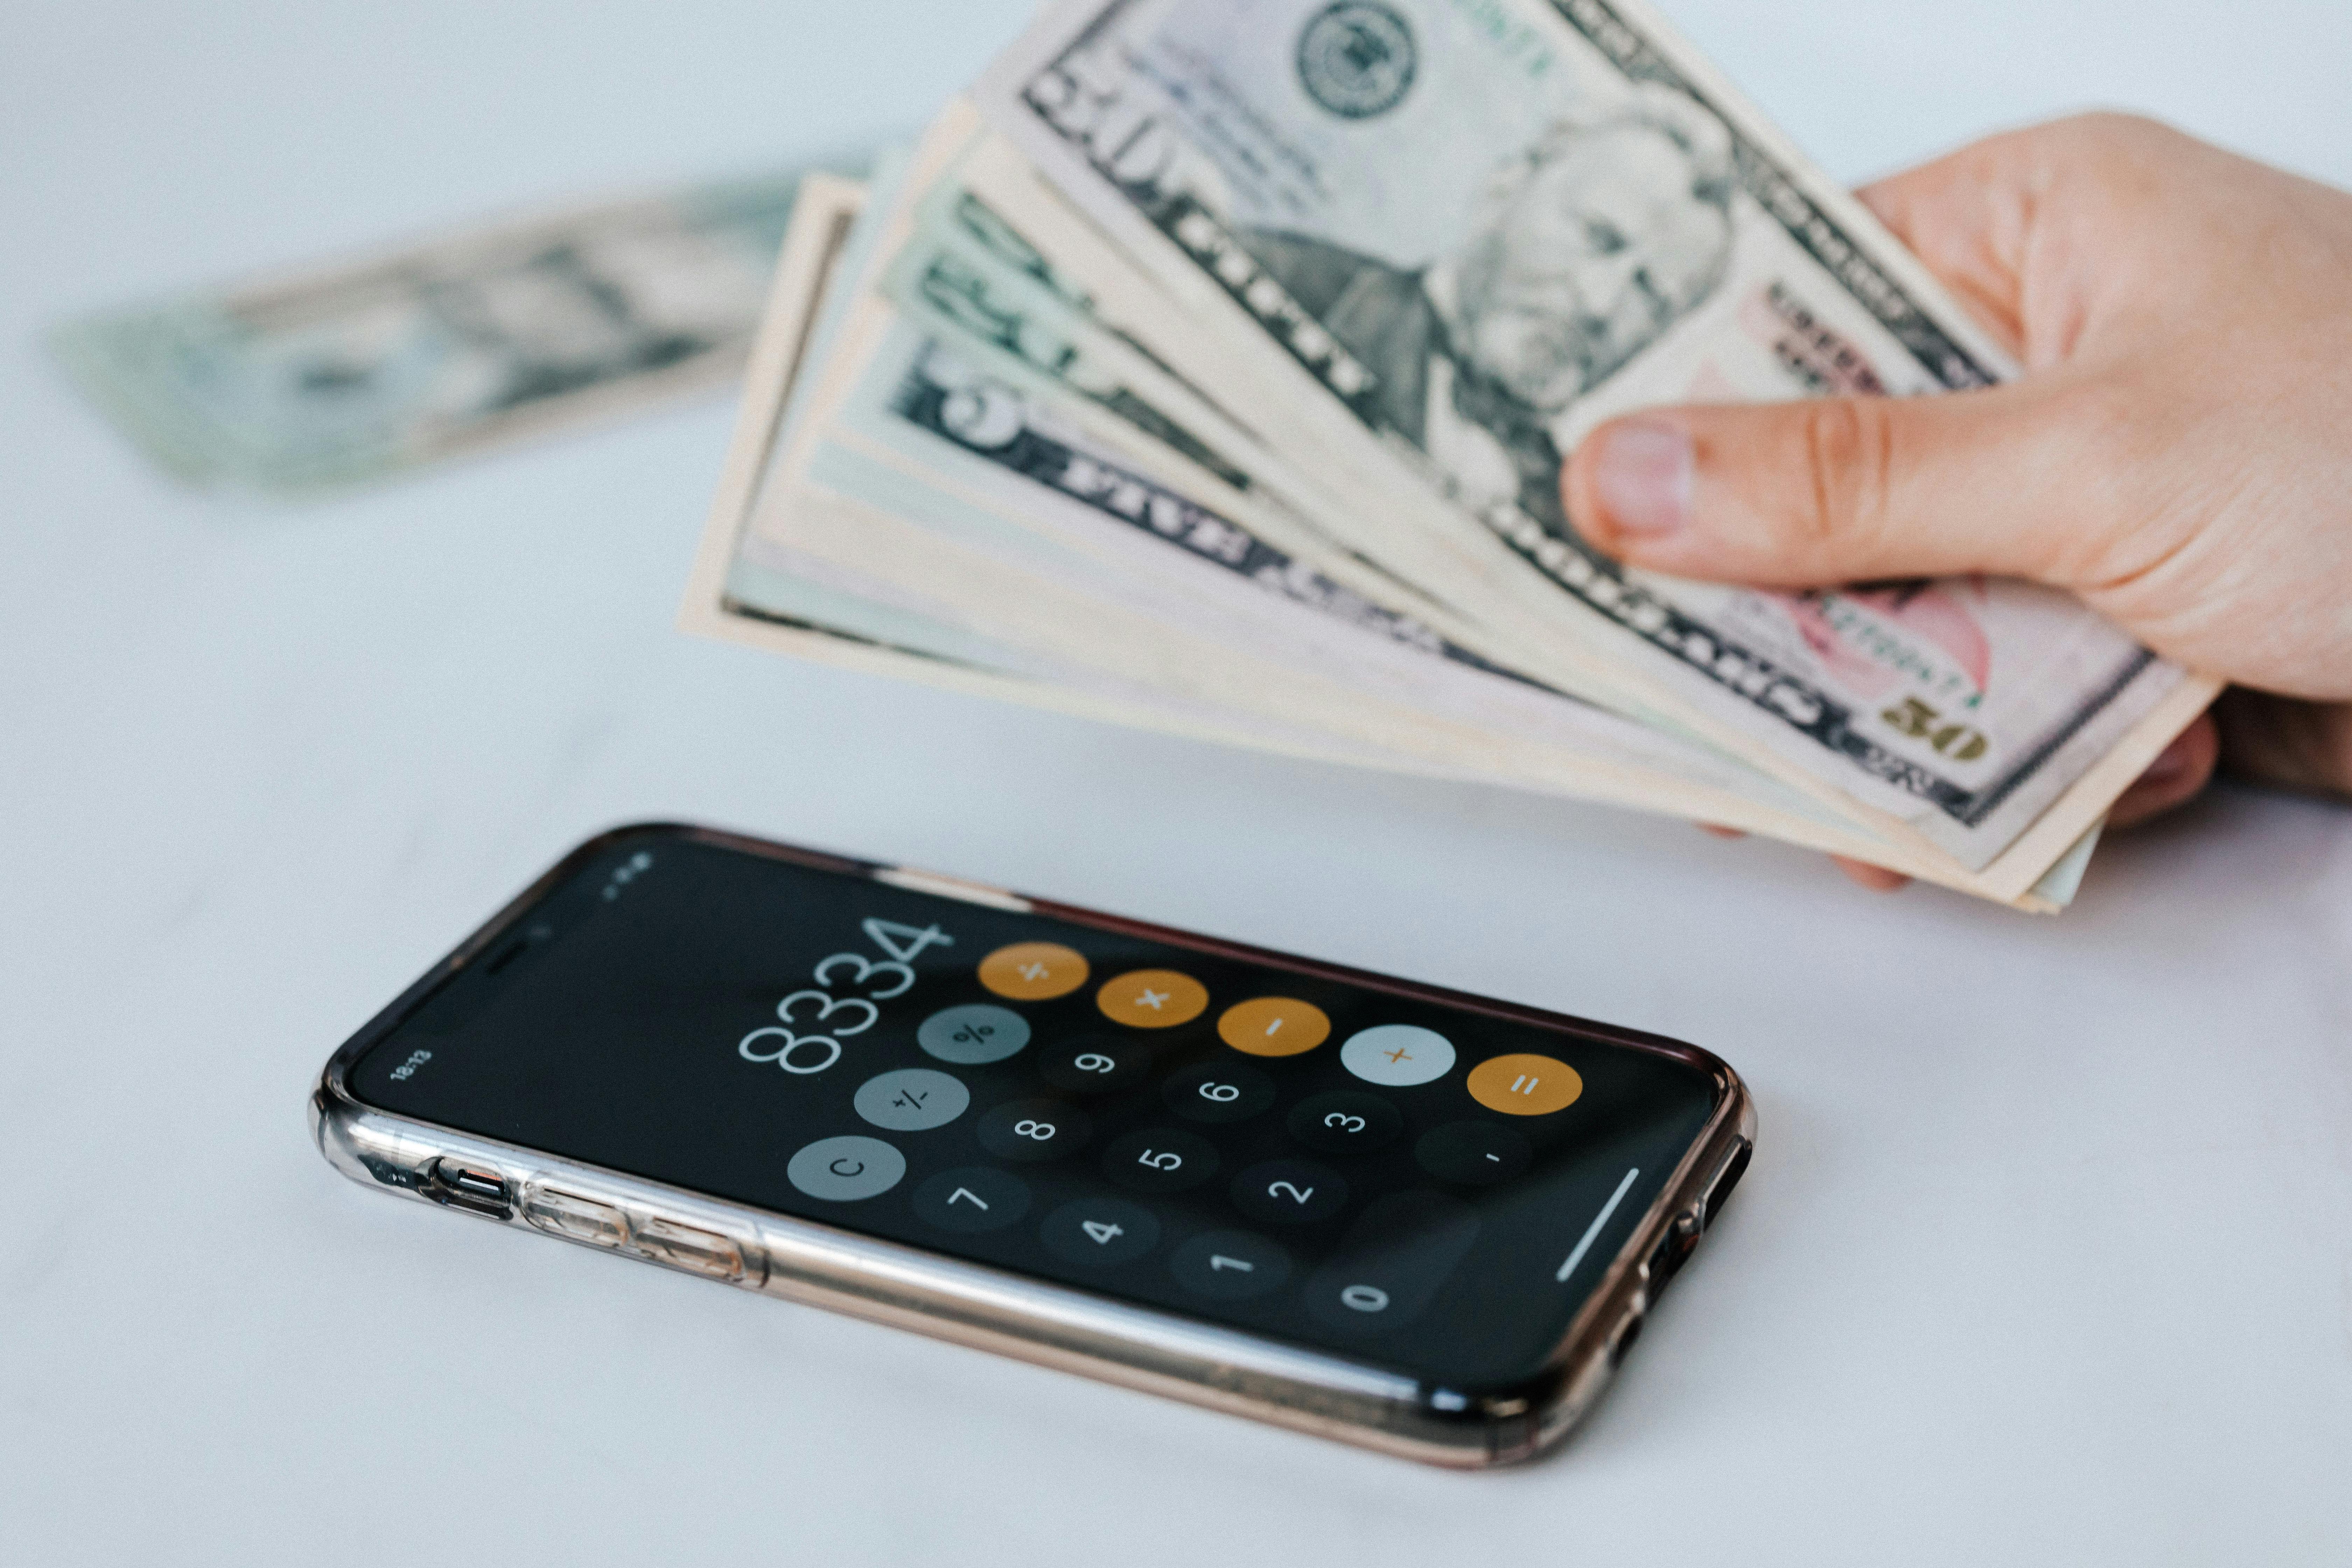 A person using a phone’s calculator to calculate cash